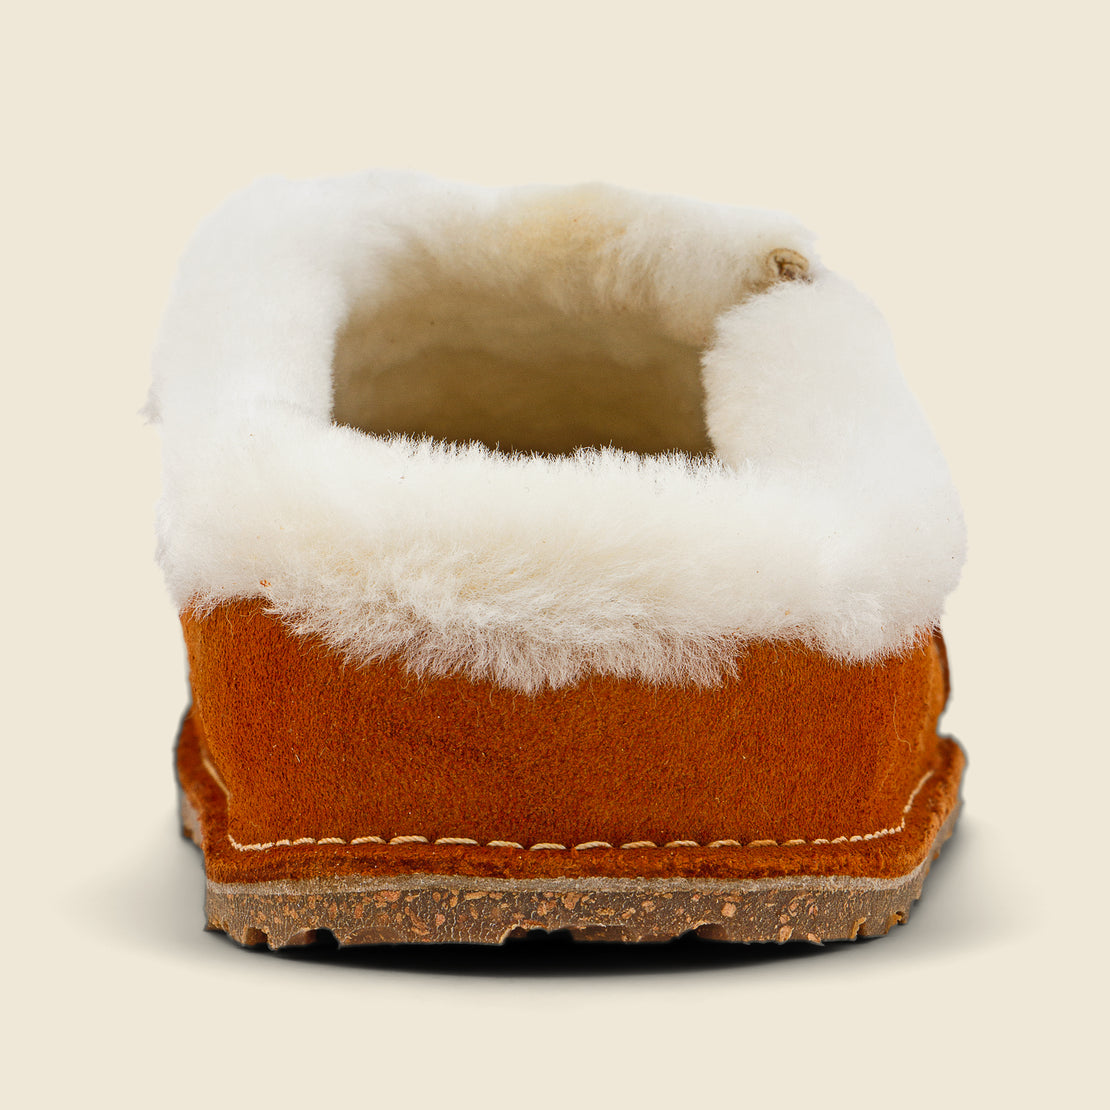 Zermatt Wool Slipper - Mink Suede/Natural Shearling - Birkenstock - STAG Provisions - Home - Bed - Slipper